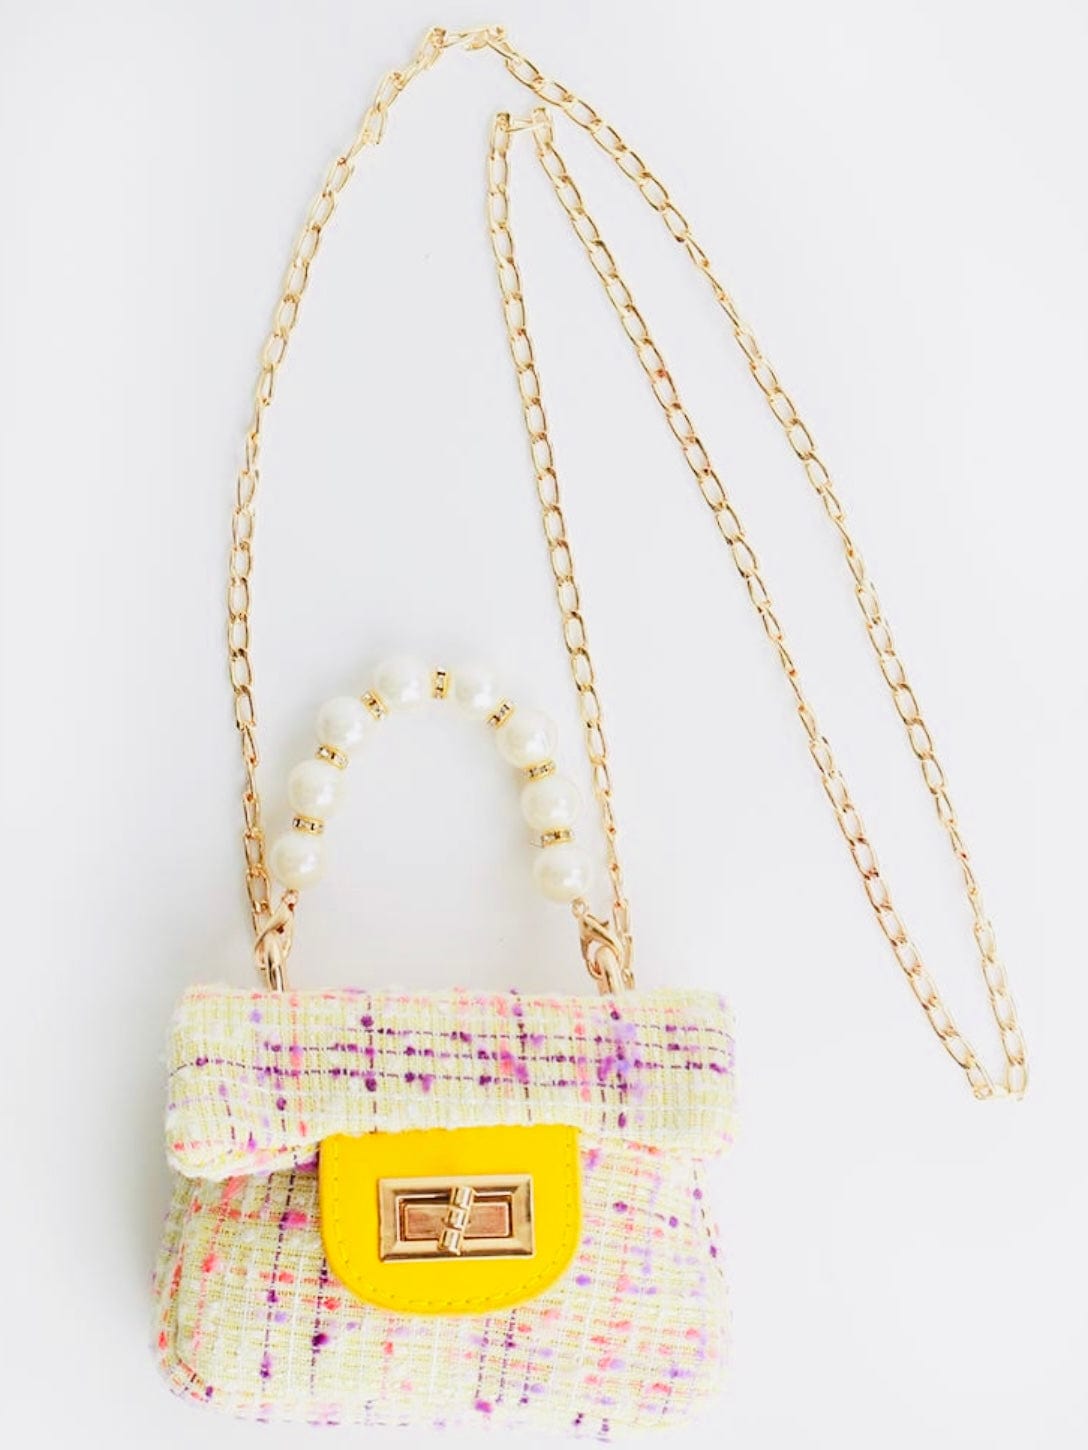 Fashionably, BBK! Accessories Girls Mini Tweed Purse | Yellow